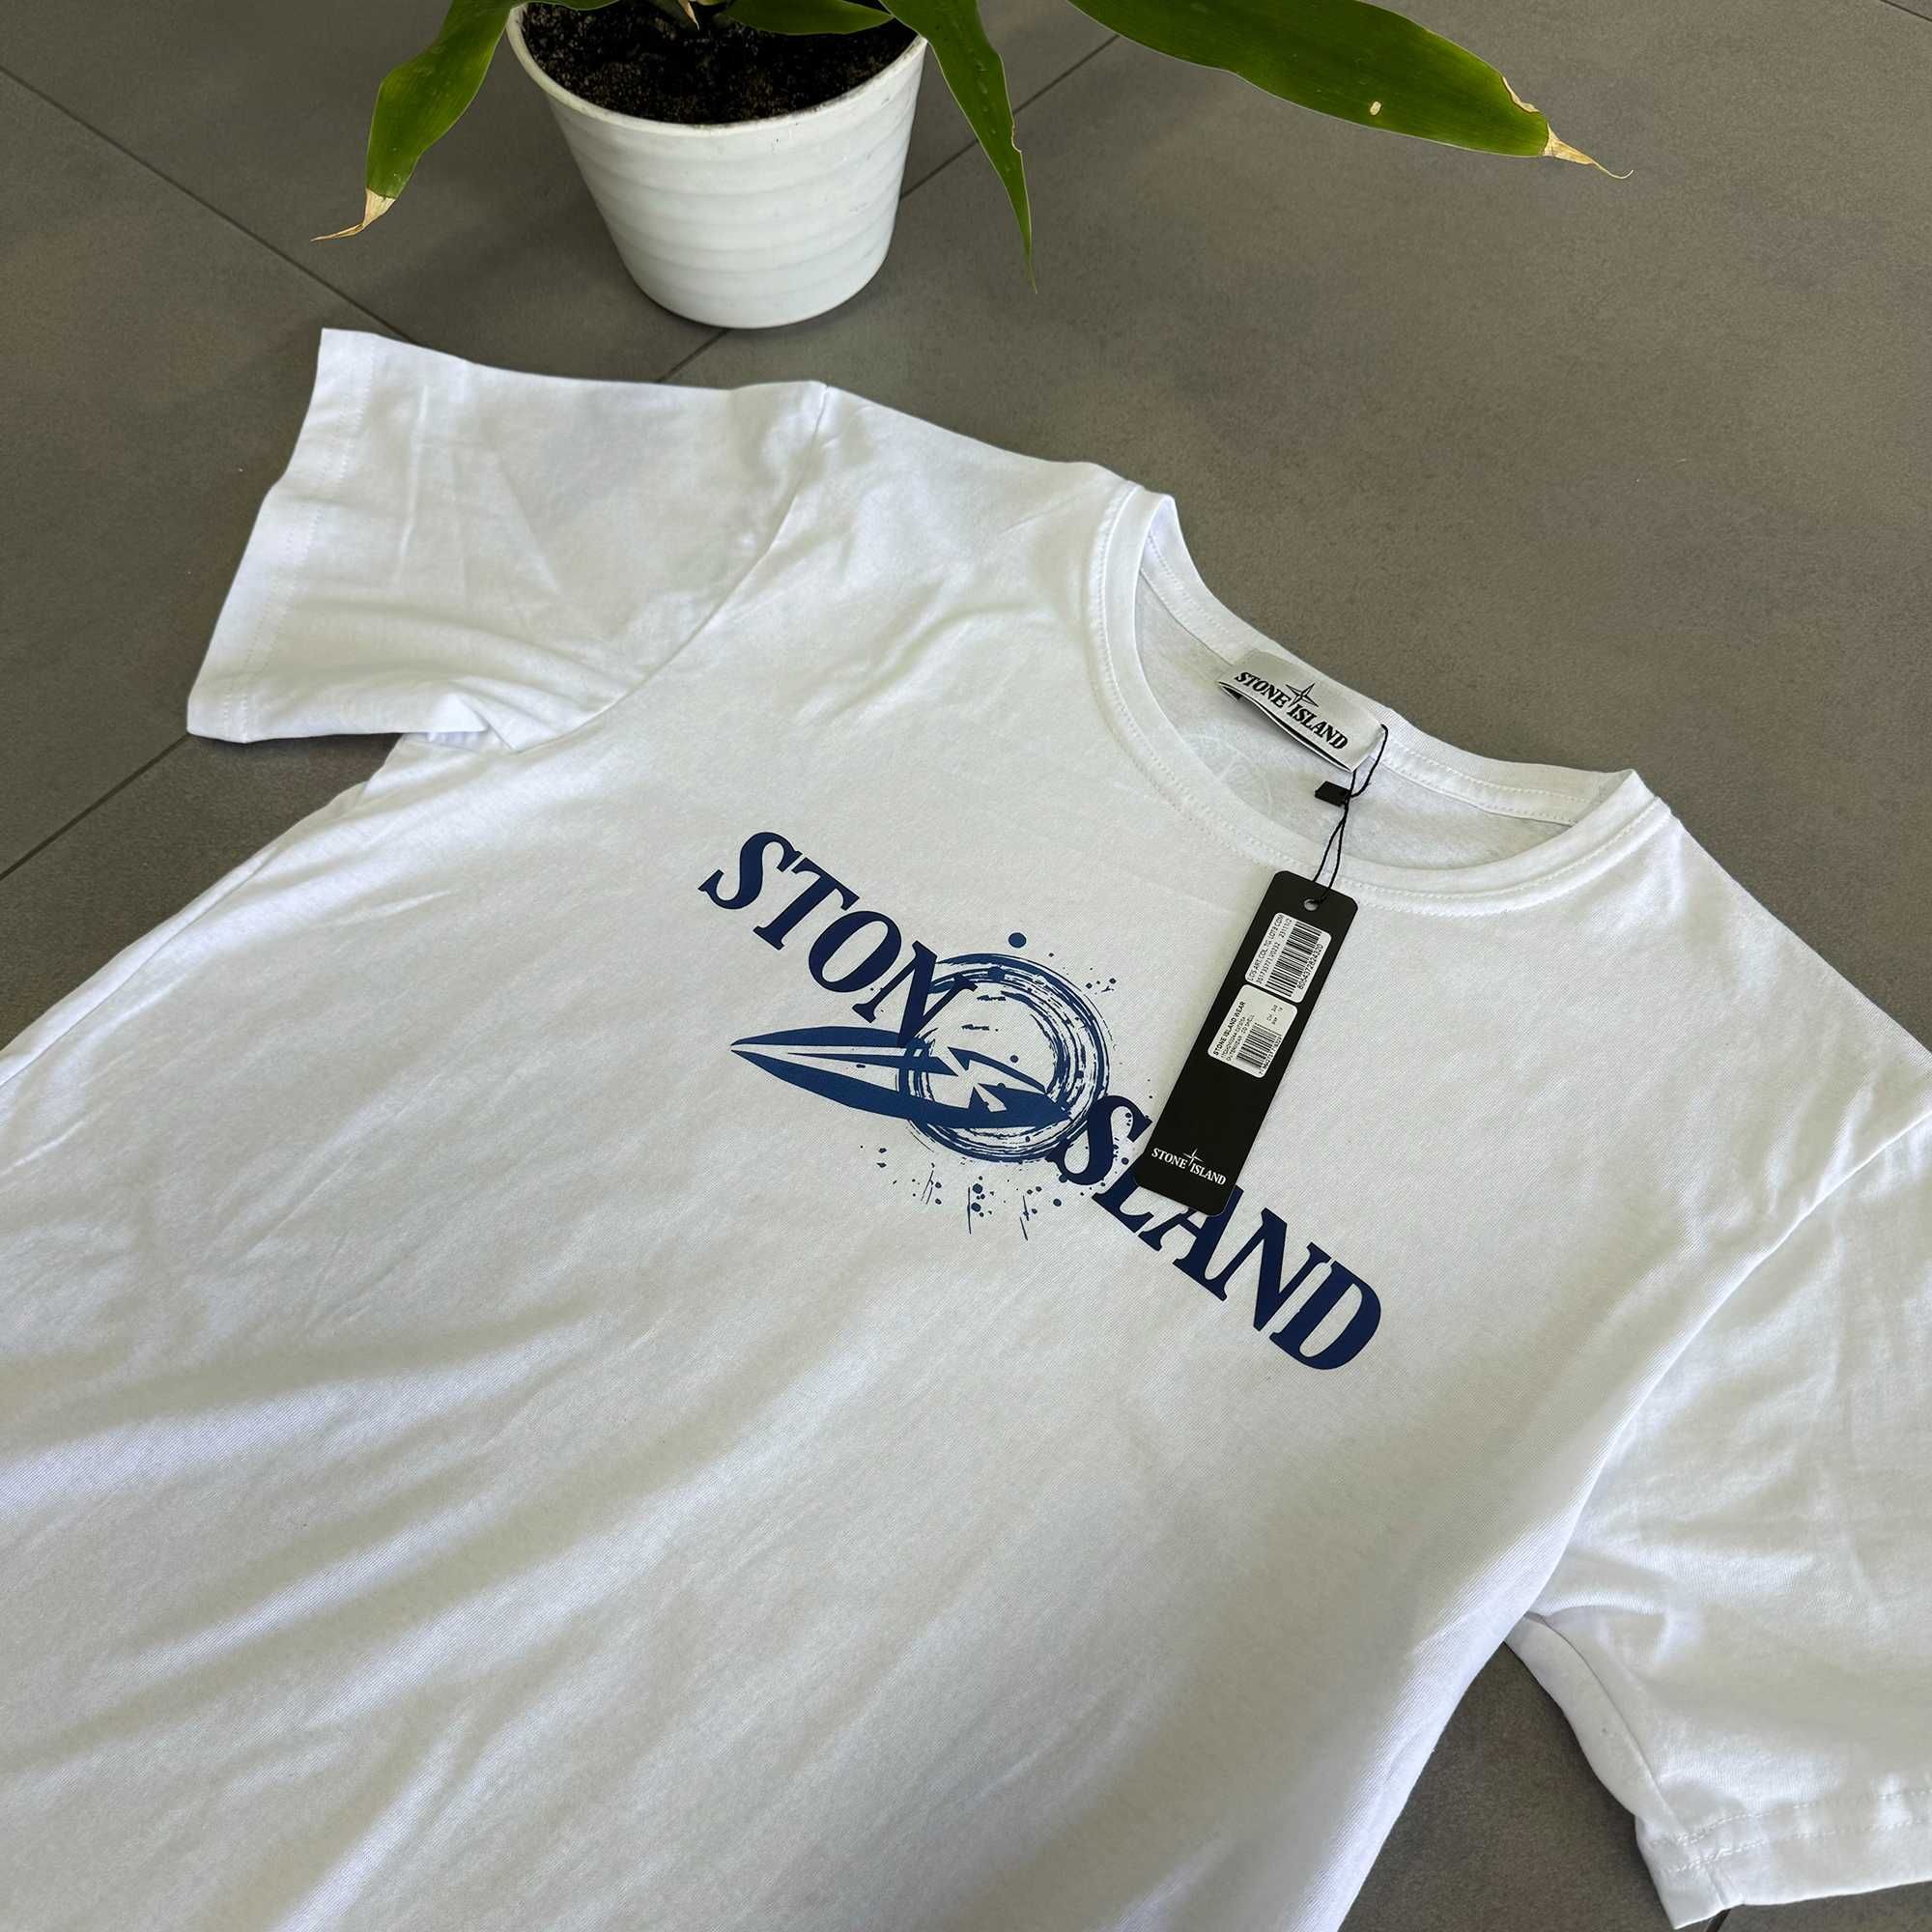 Stone Island • NEW COLLECTION • Стон Айленд футболка новая • Стоник